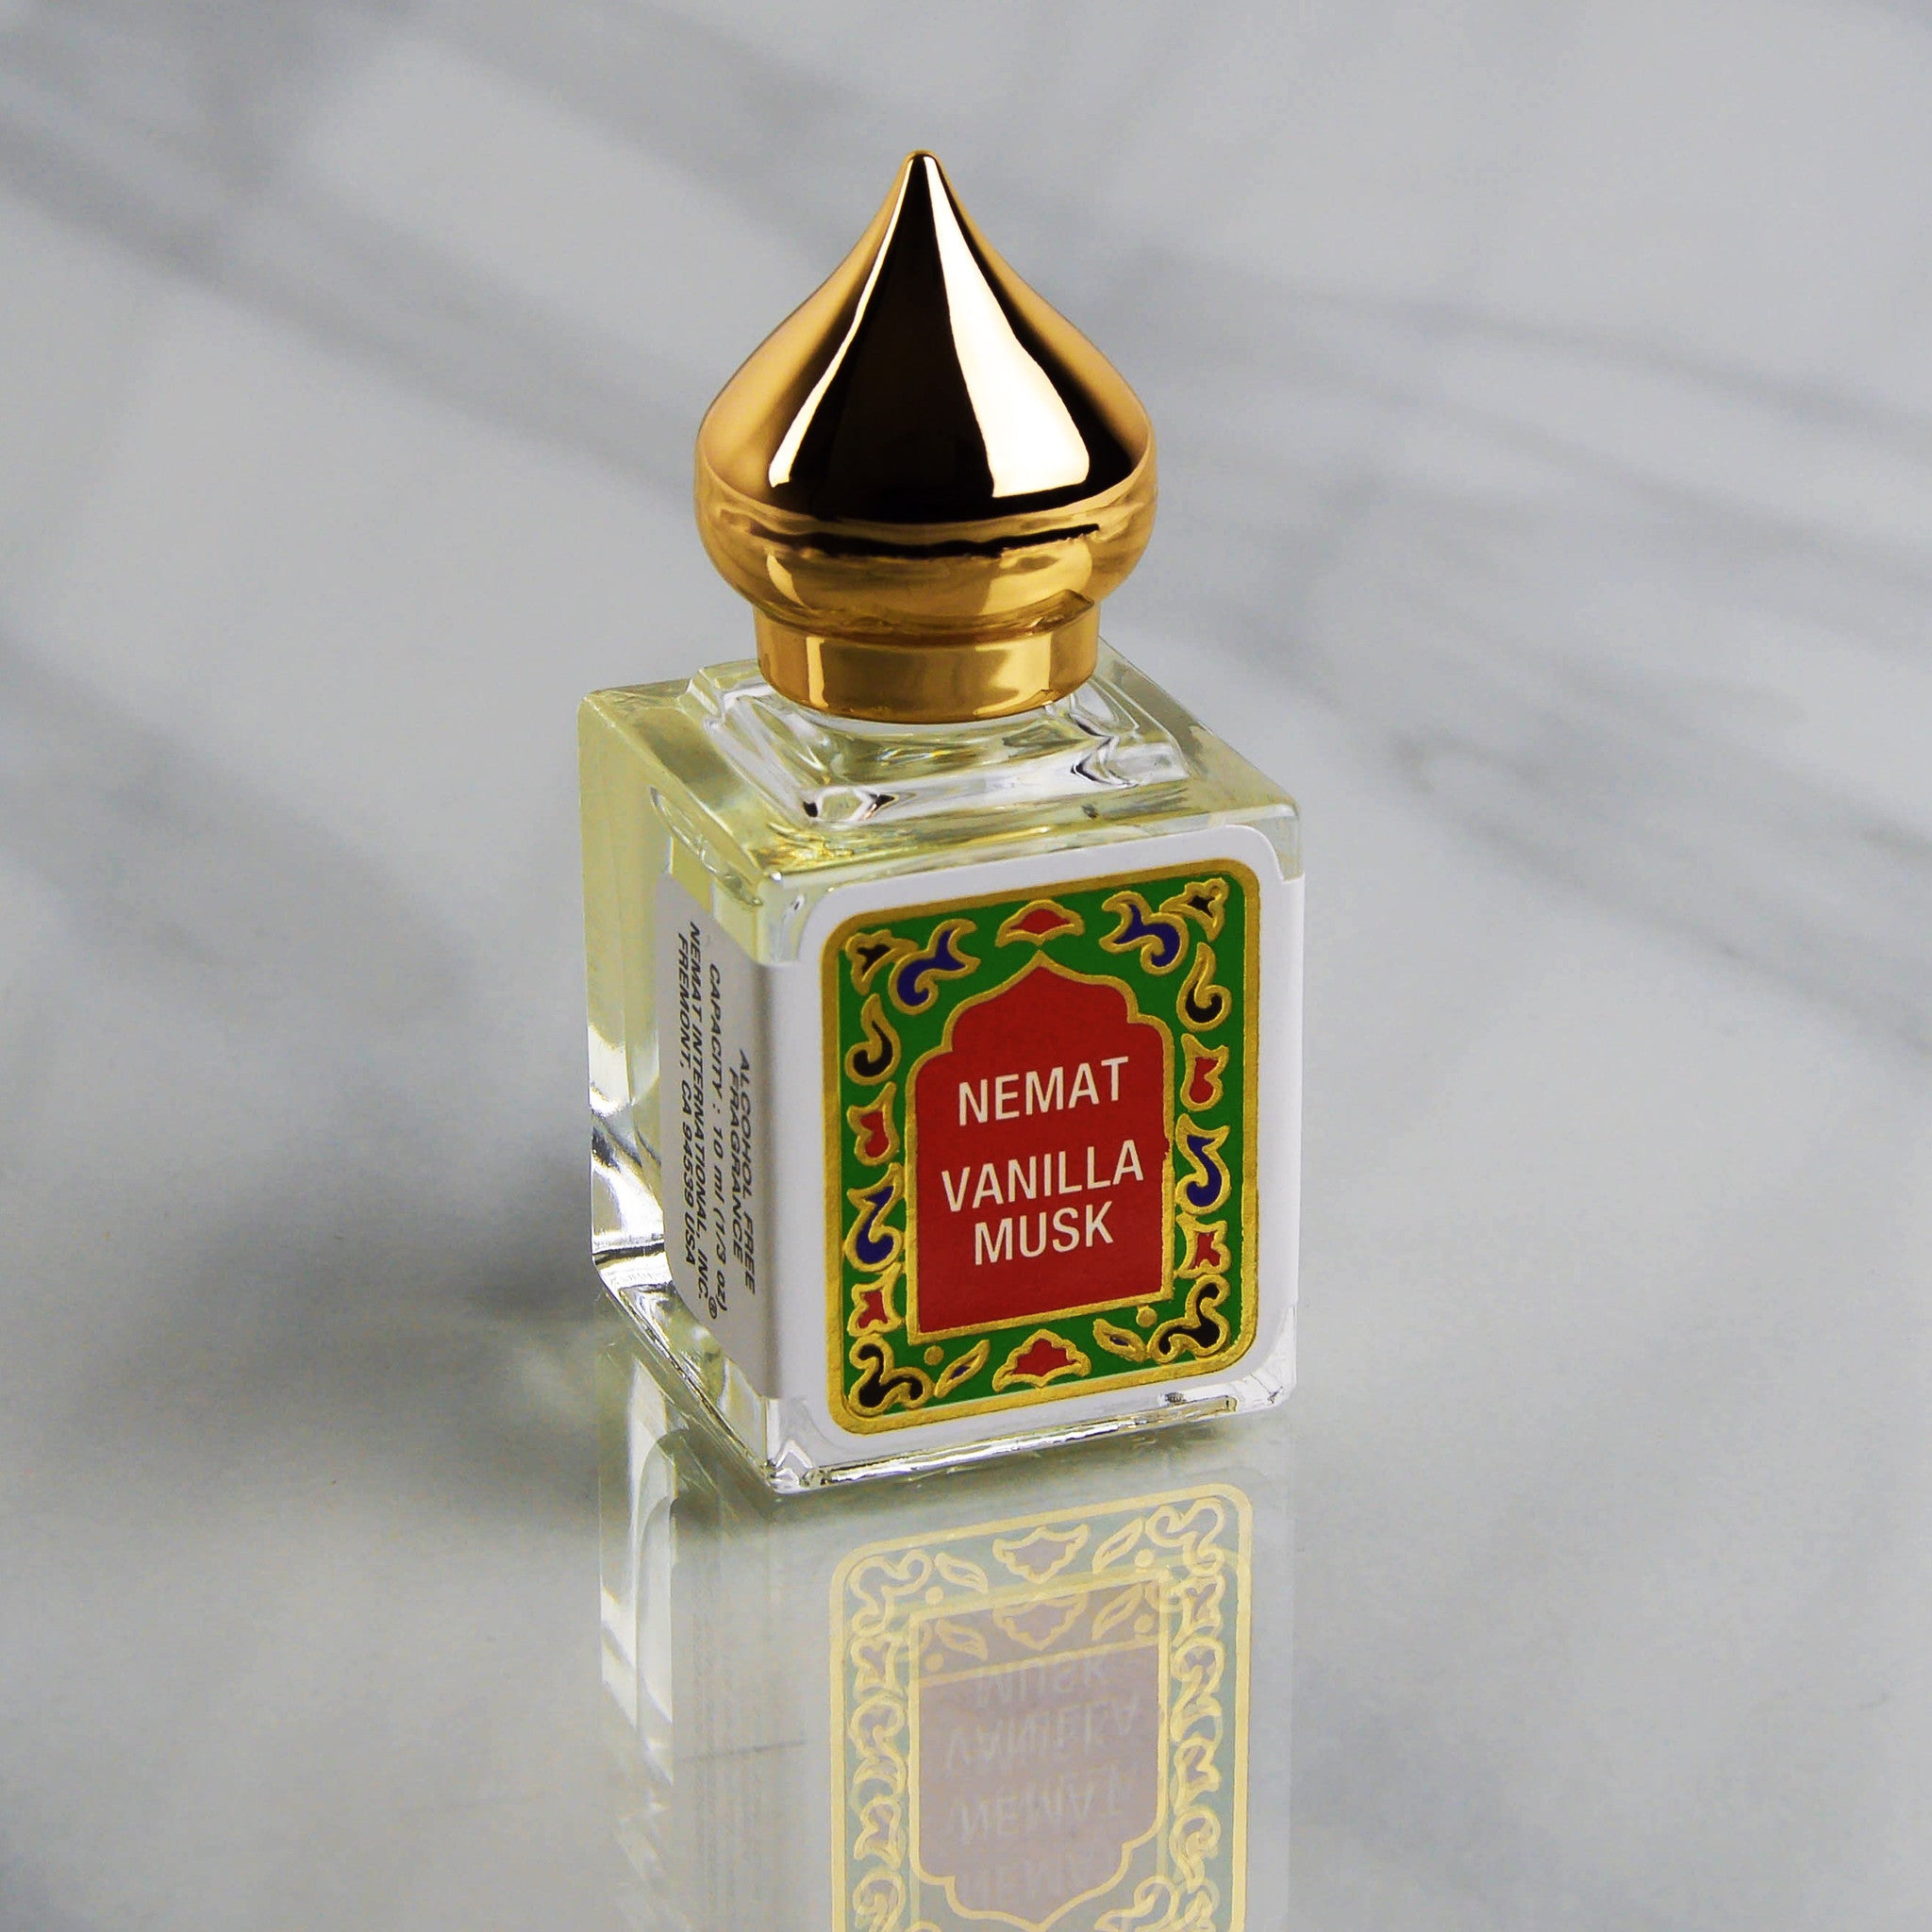 Nemat Vanilla Musk- The $9 perfume you NEED - Justina's Gems